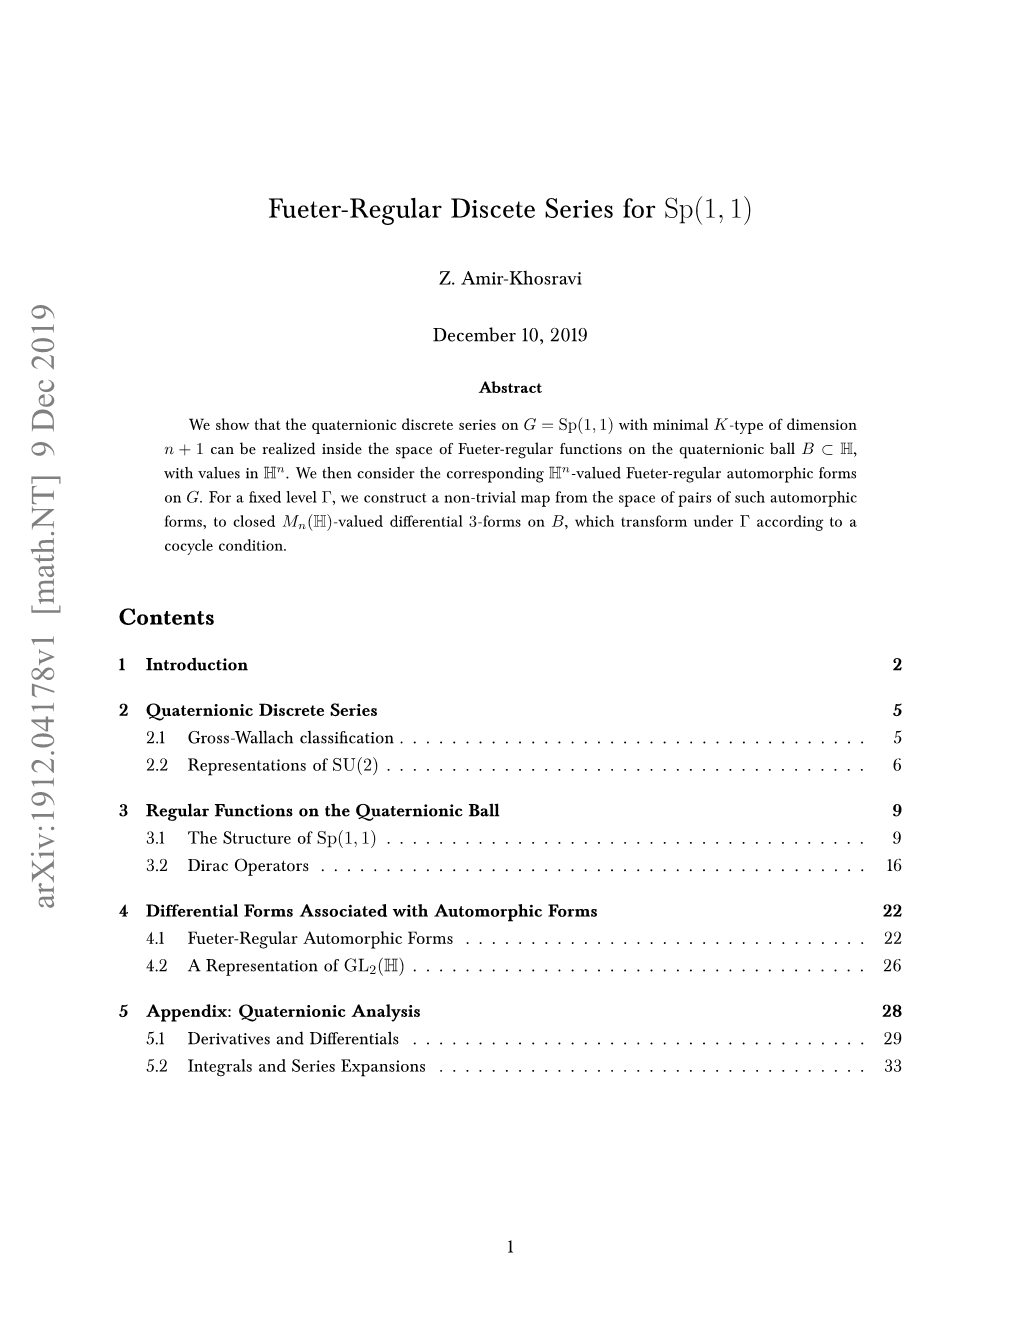 Fueter-Regular Discete Series for Sp(1,1)